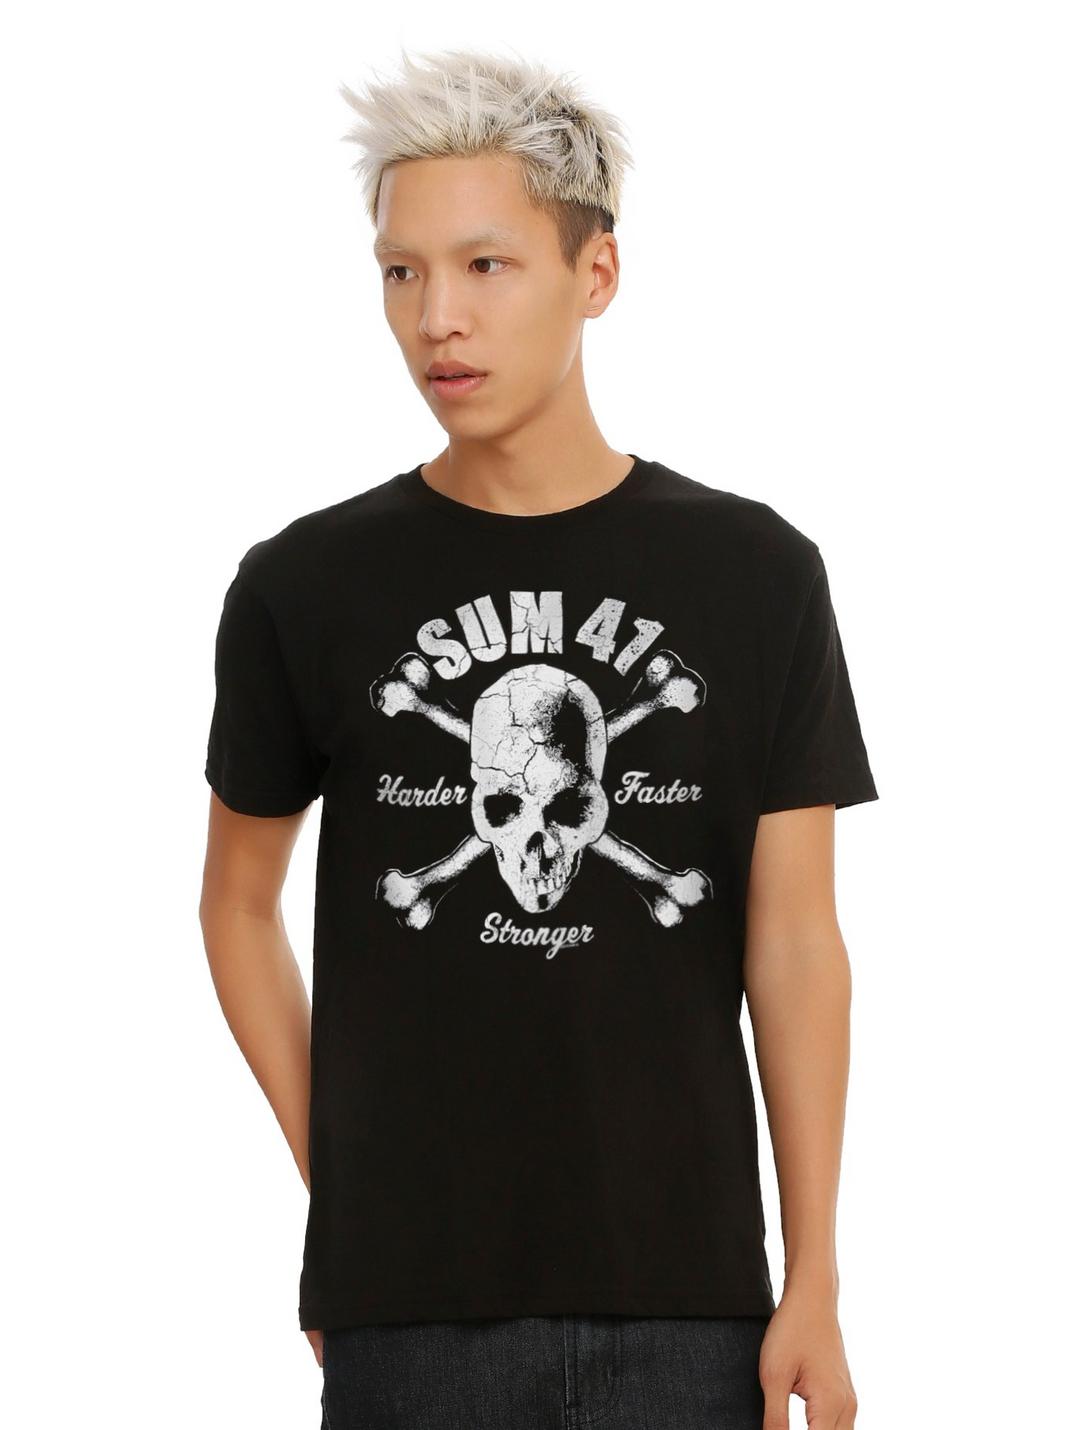 Sum 41 Harder Faster Stronger Skull T-Shirt, BLACK, hi-res